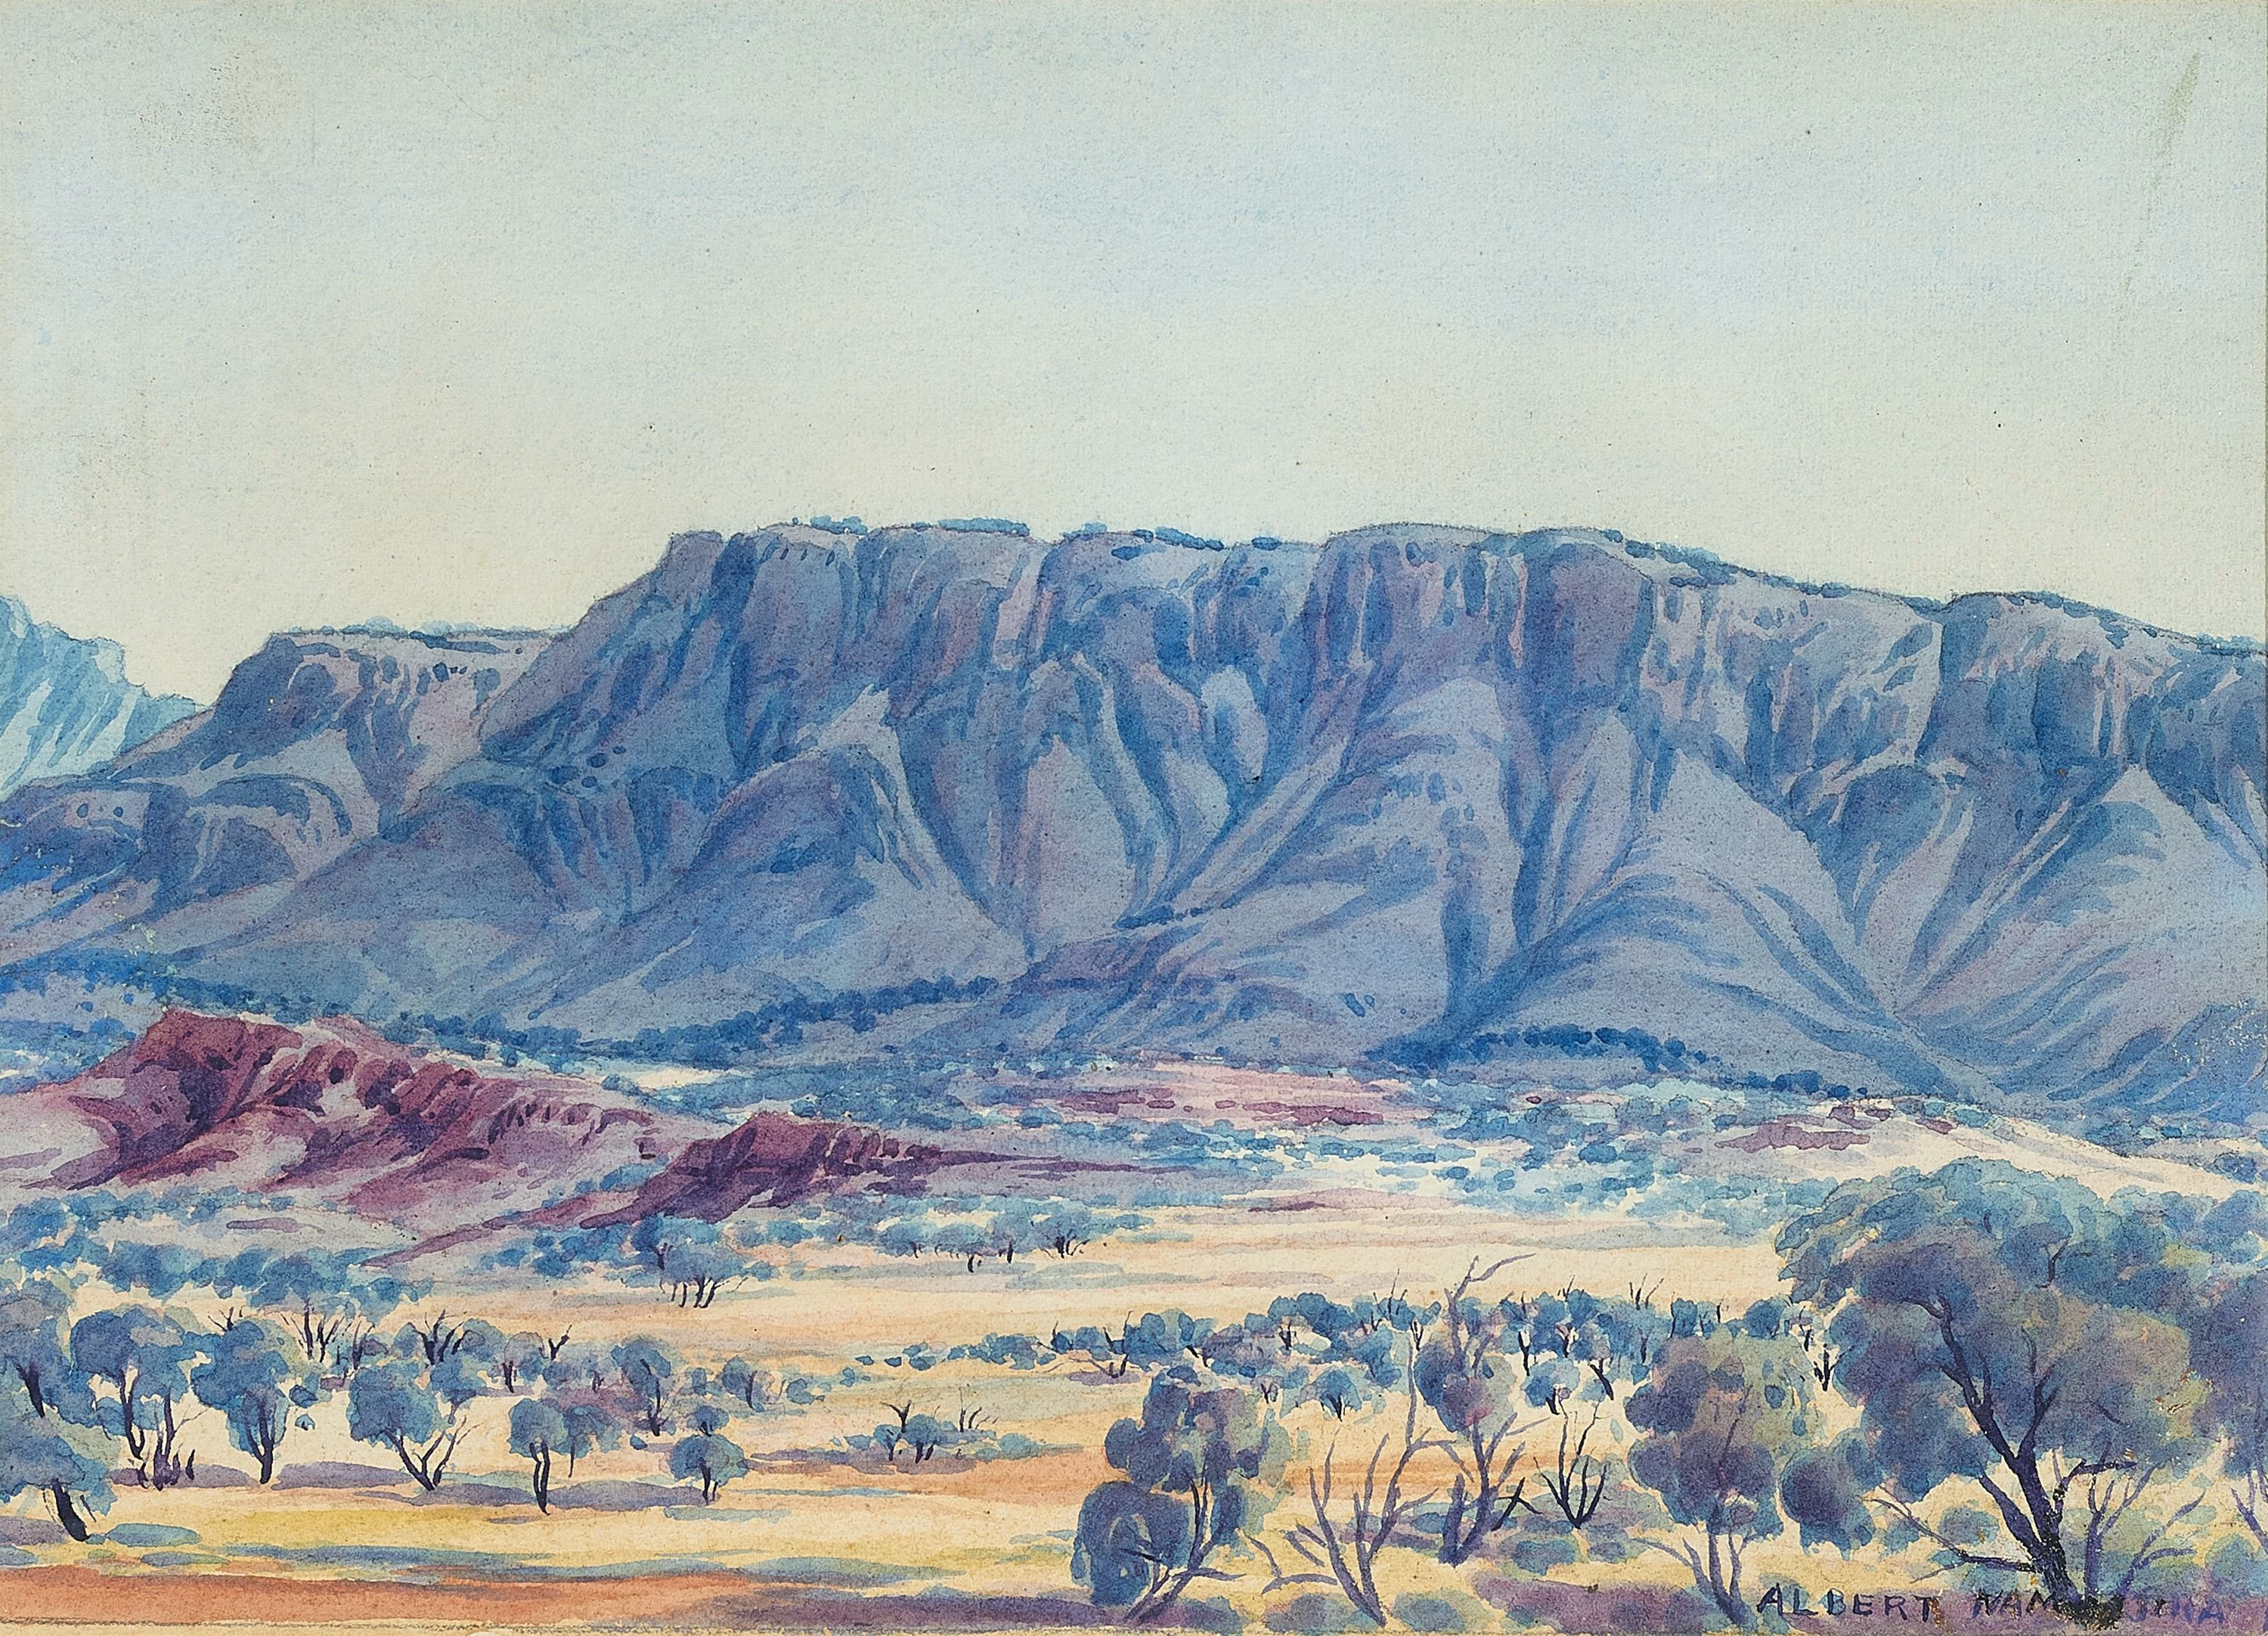 Untitled (Central Australian Landscape), Albert Namatjira